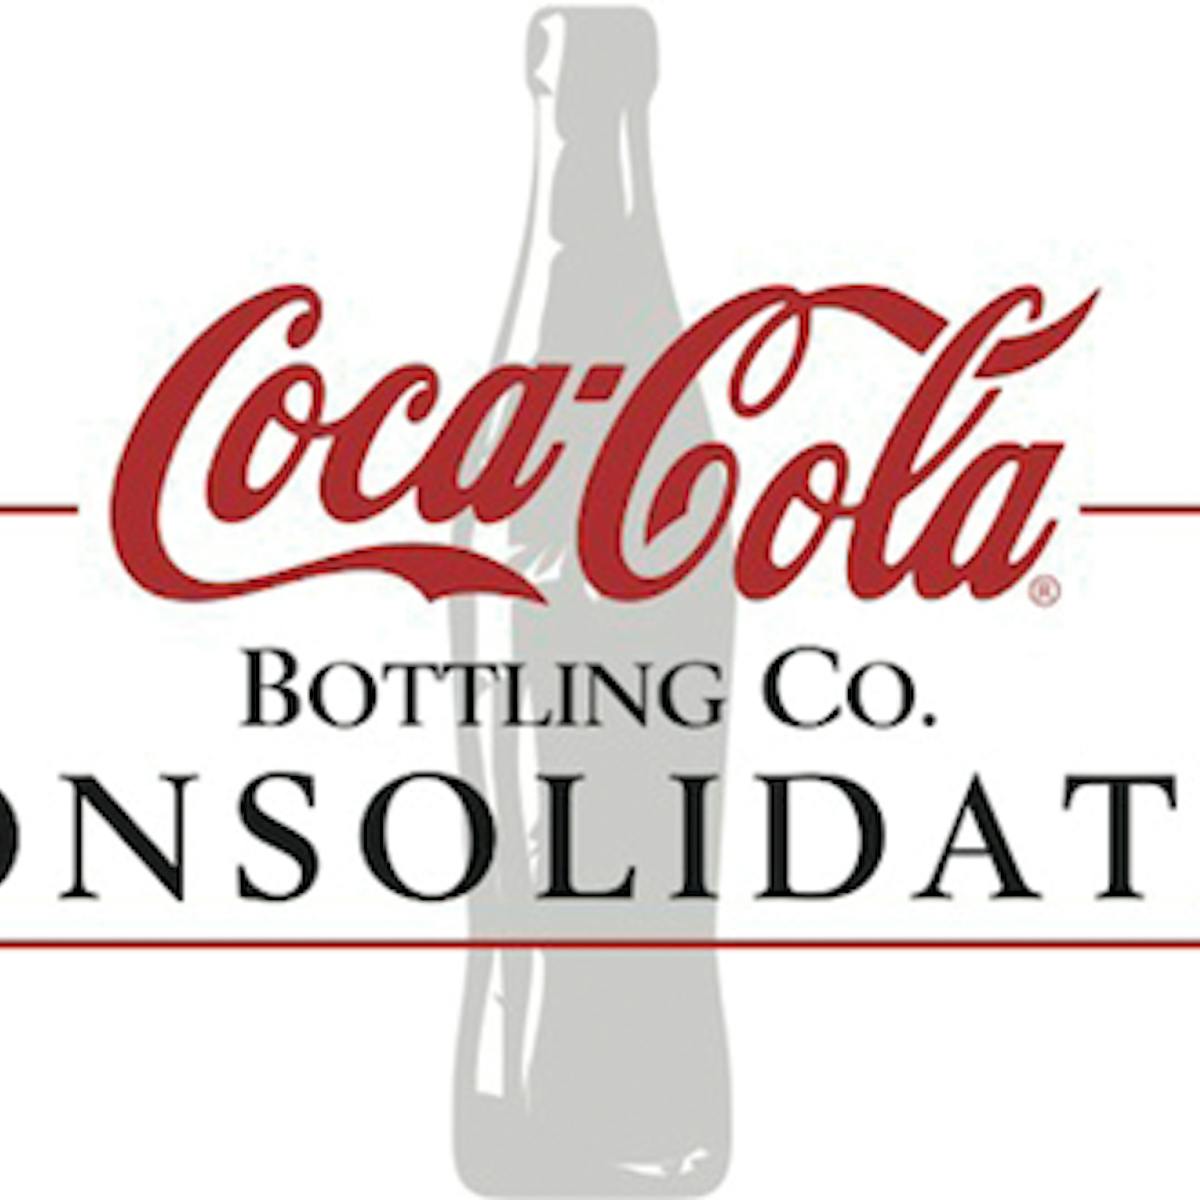 Coca Cola Consolidated Logo 11449235